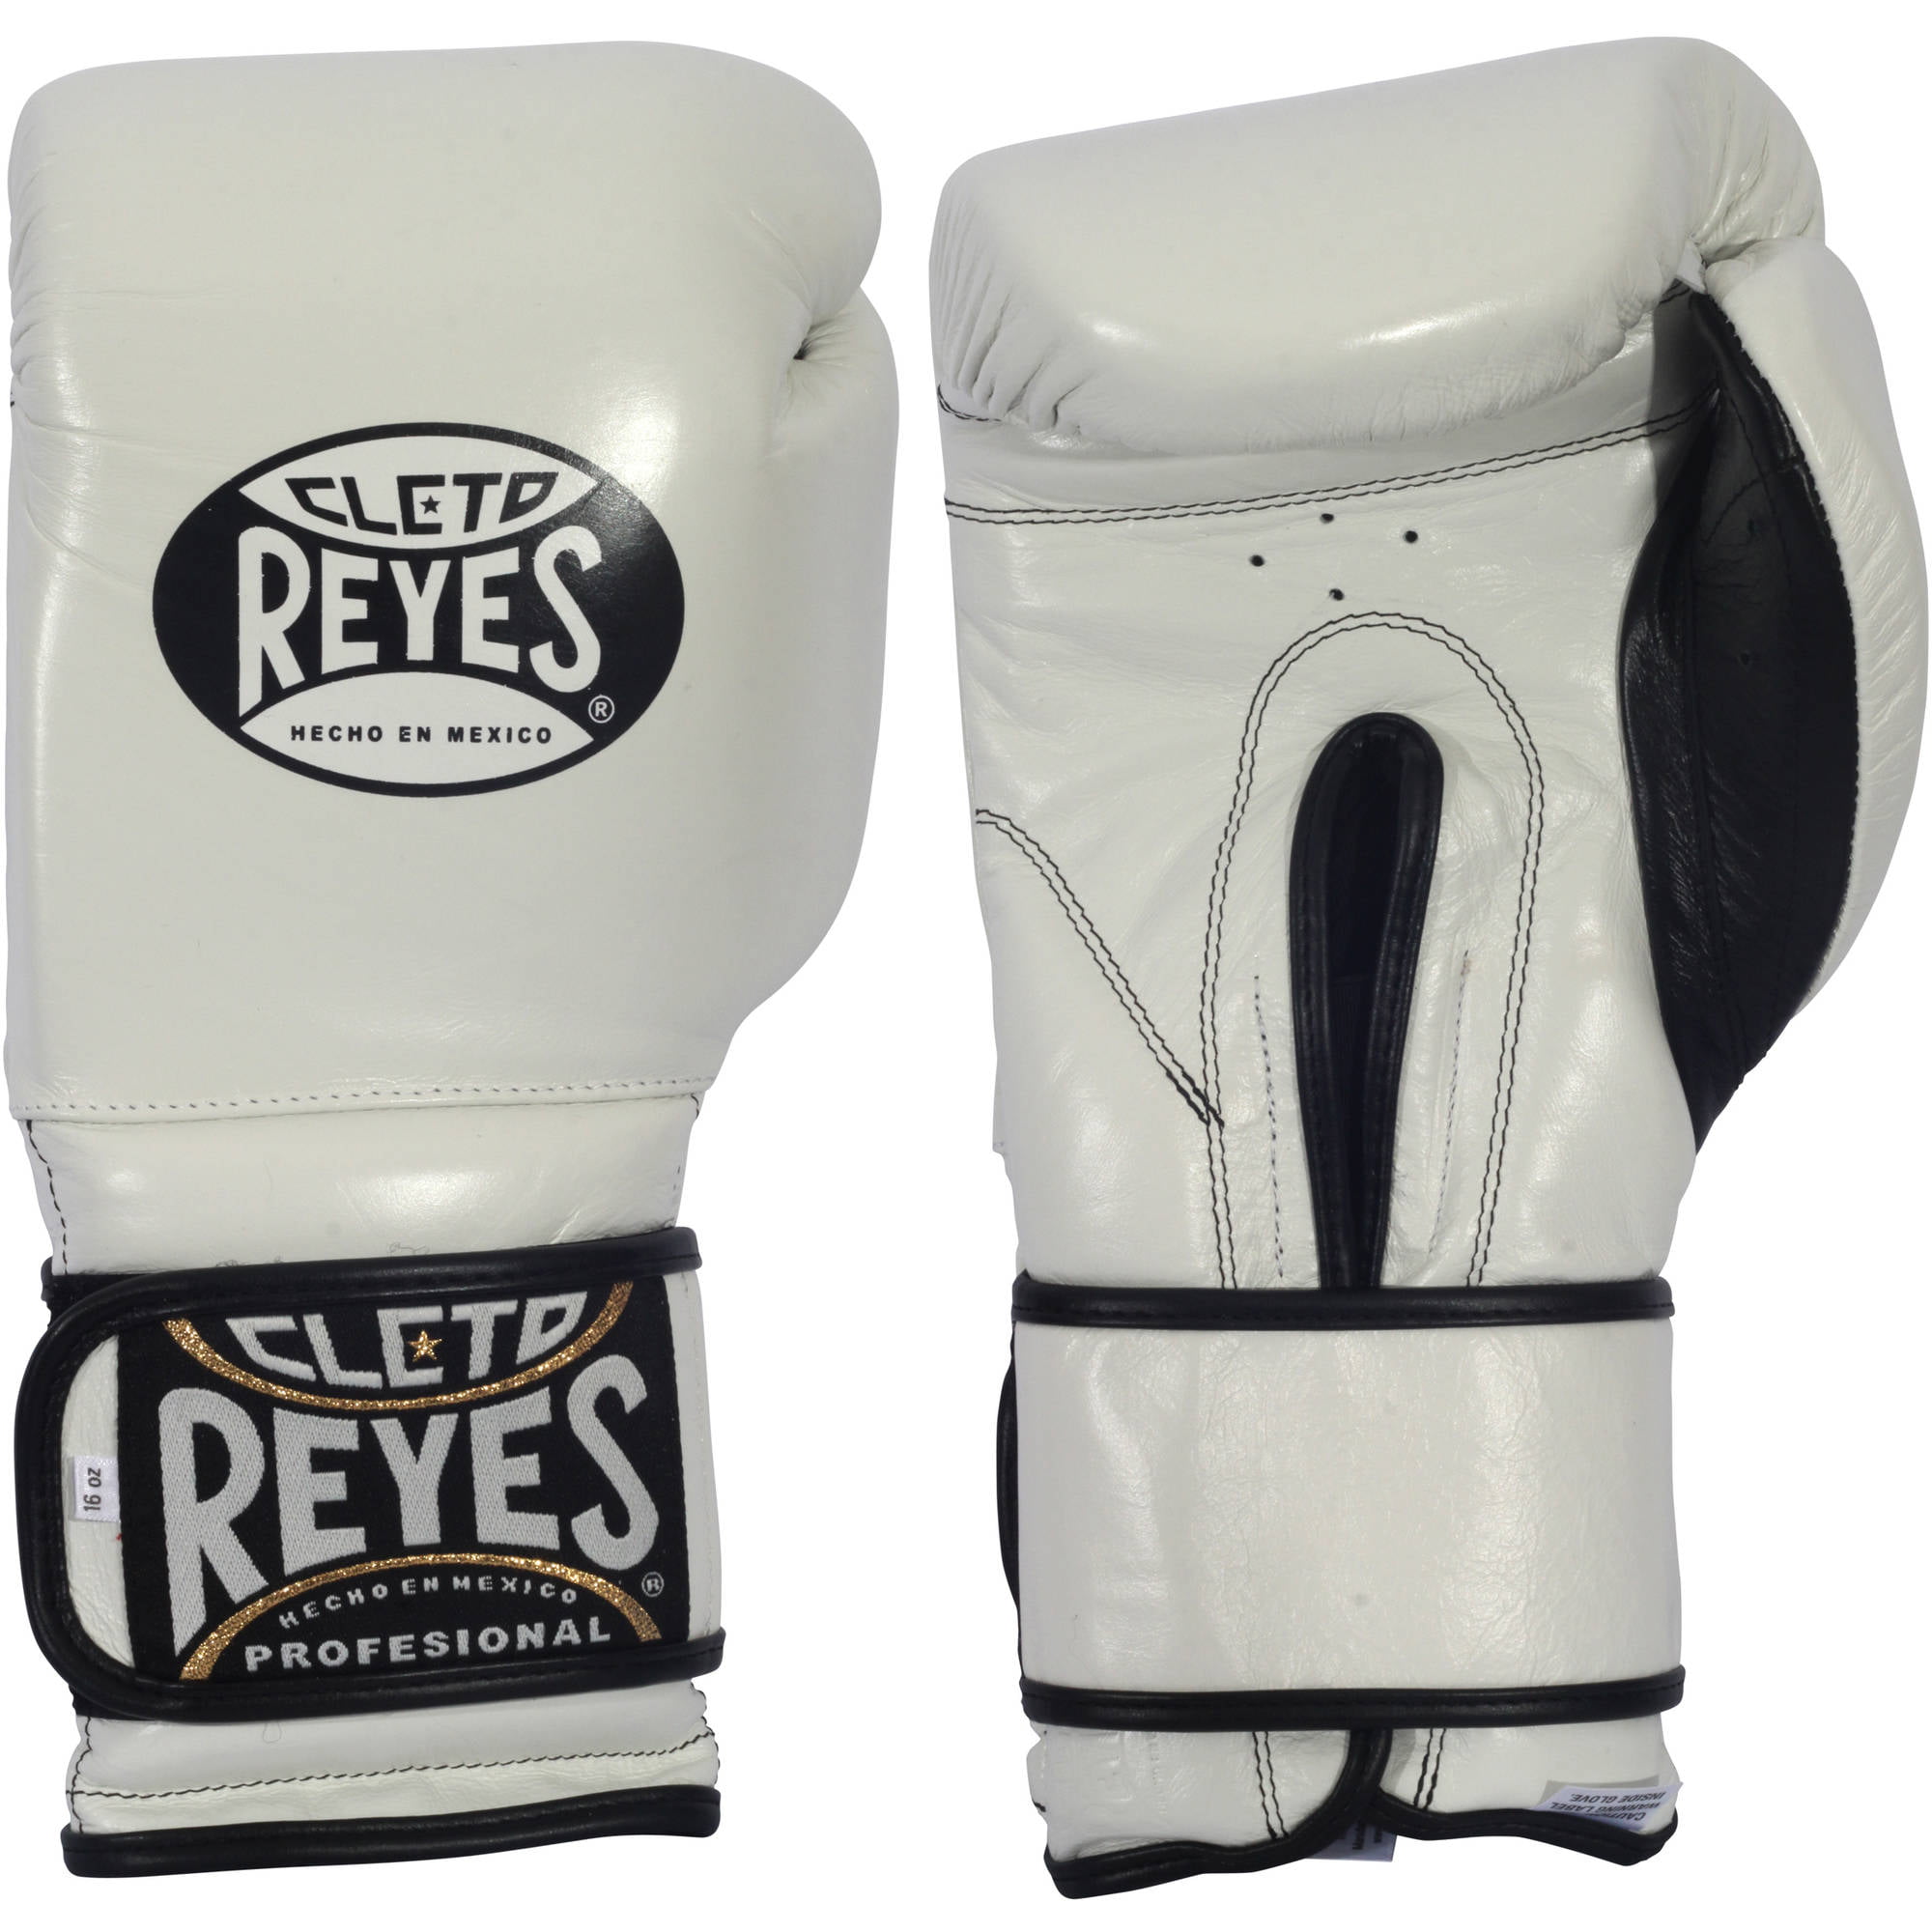 *FREE* Cleto Reyes Boxing Gloves Wrap Around Sparring Training Gloves White